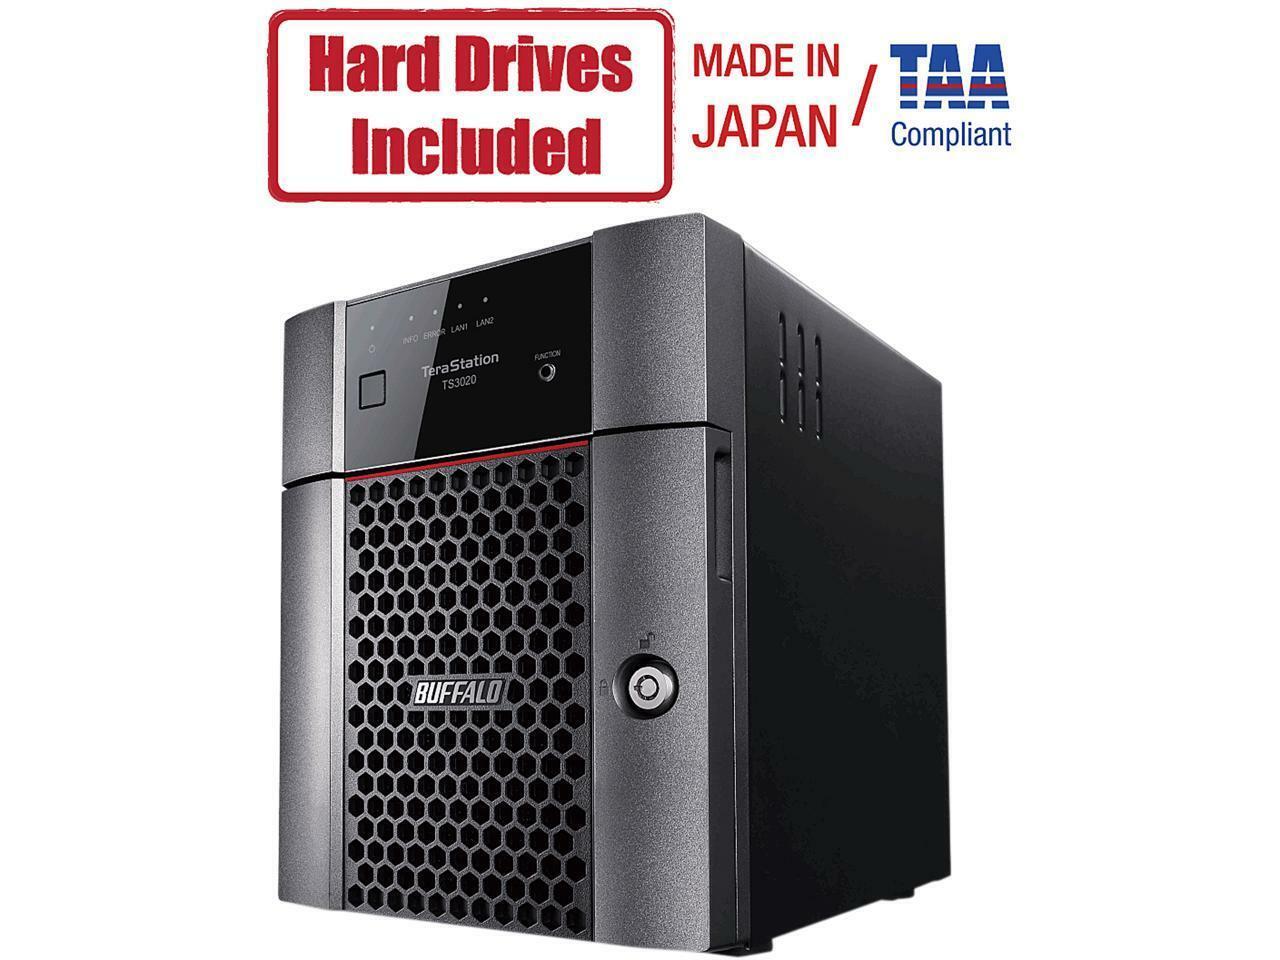 Buffalo TeraStation 3420DN 16TB NAS Hard Drives Included (4 x 4TB, 4 Bay)